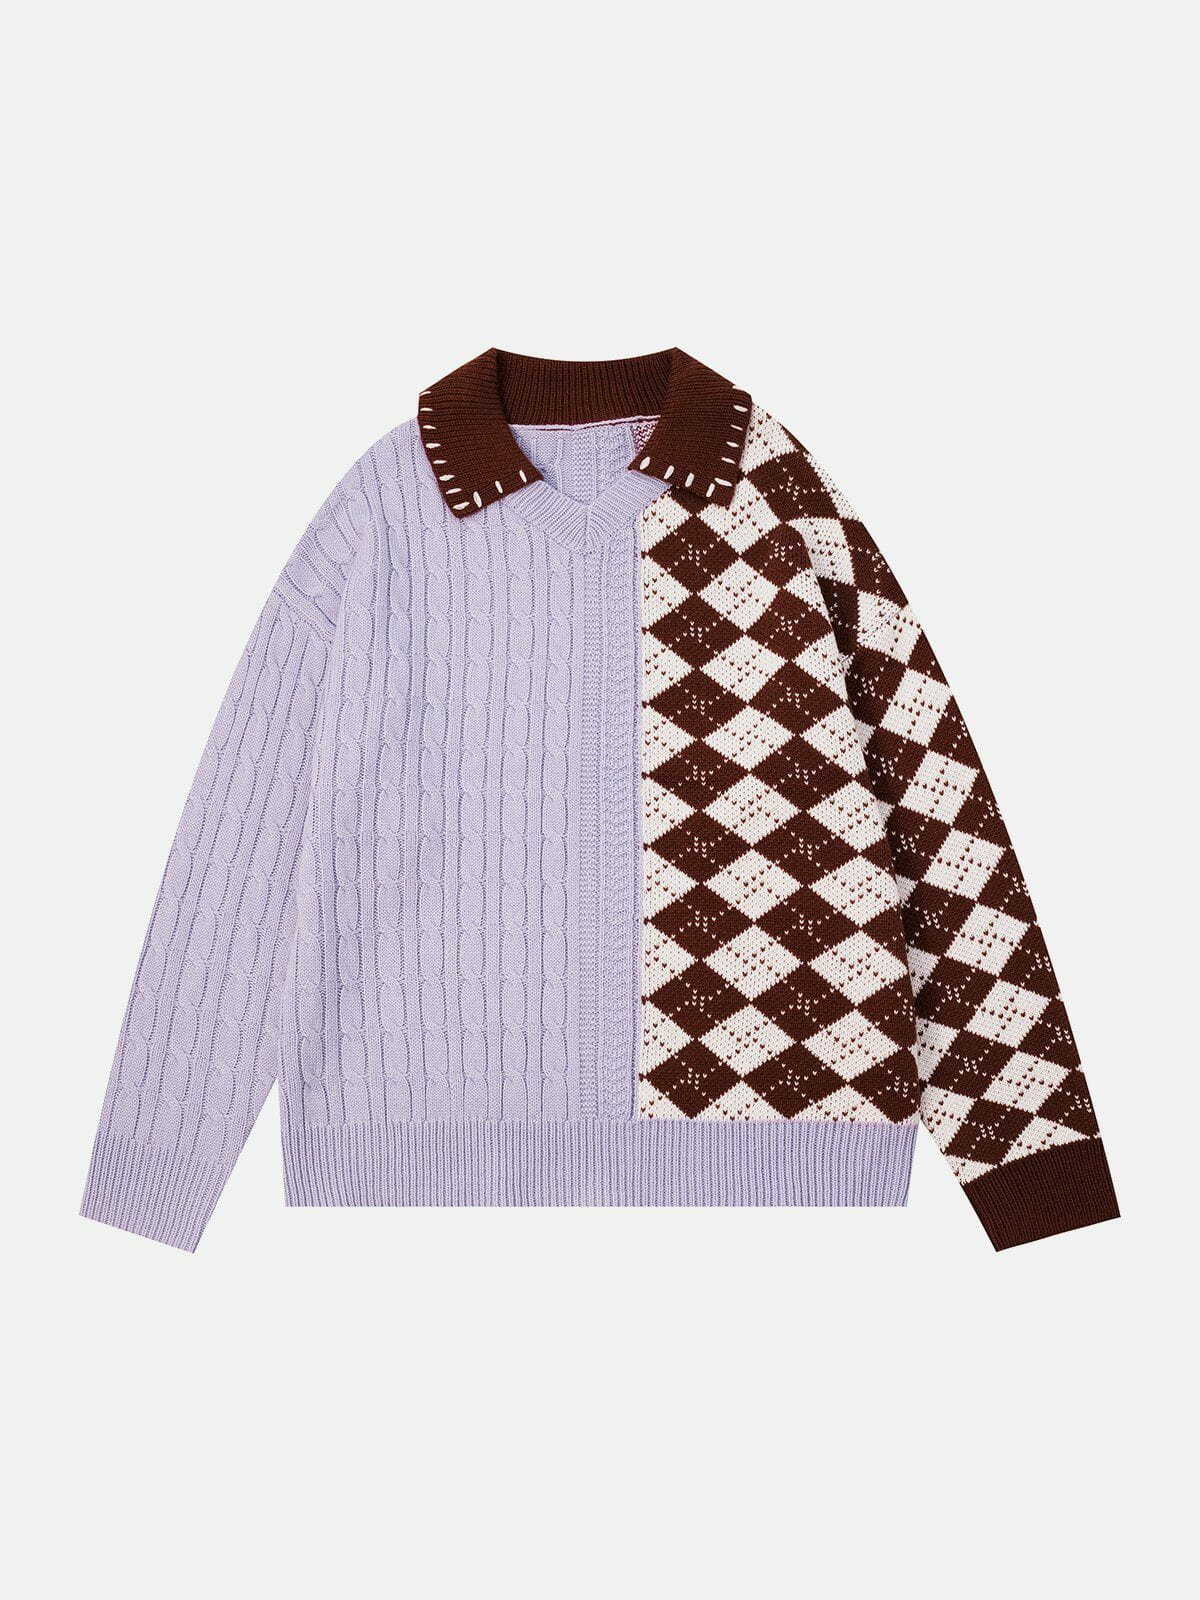 plaid polo collar sweater retro urban statement 4718